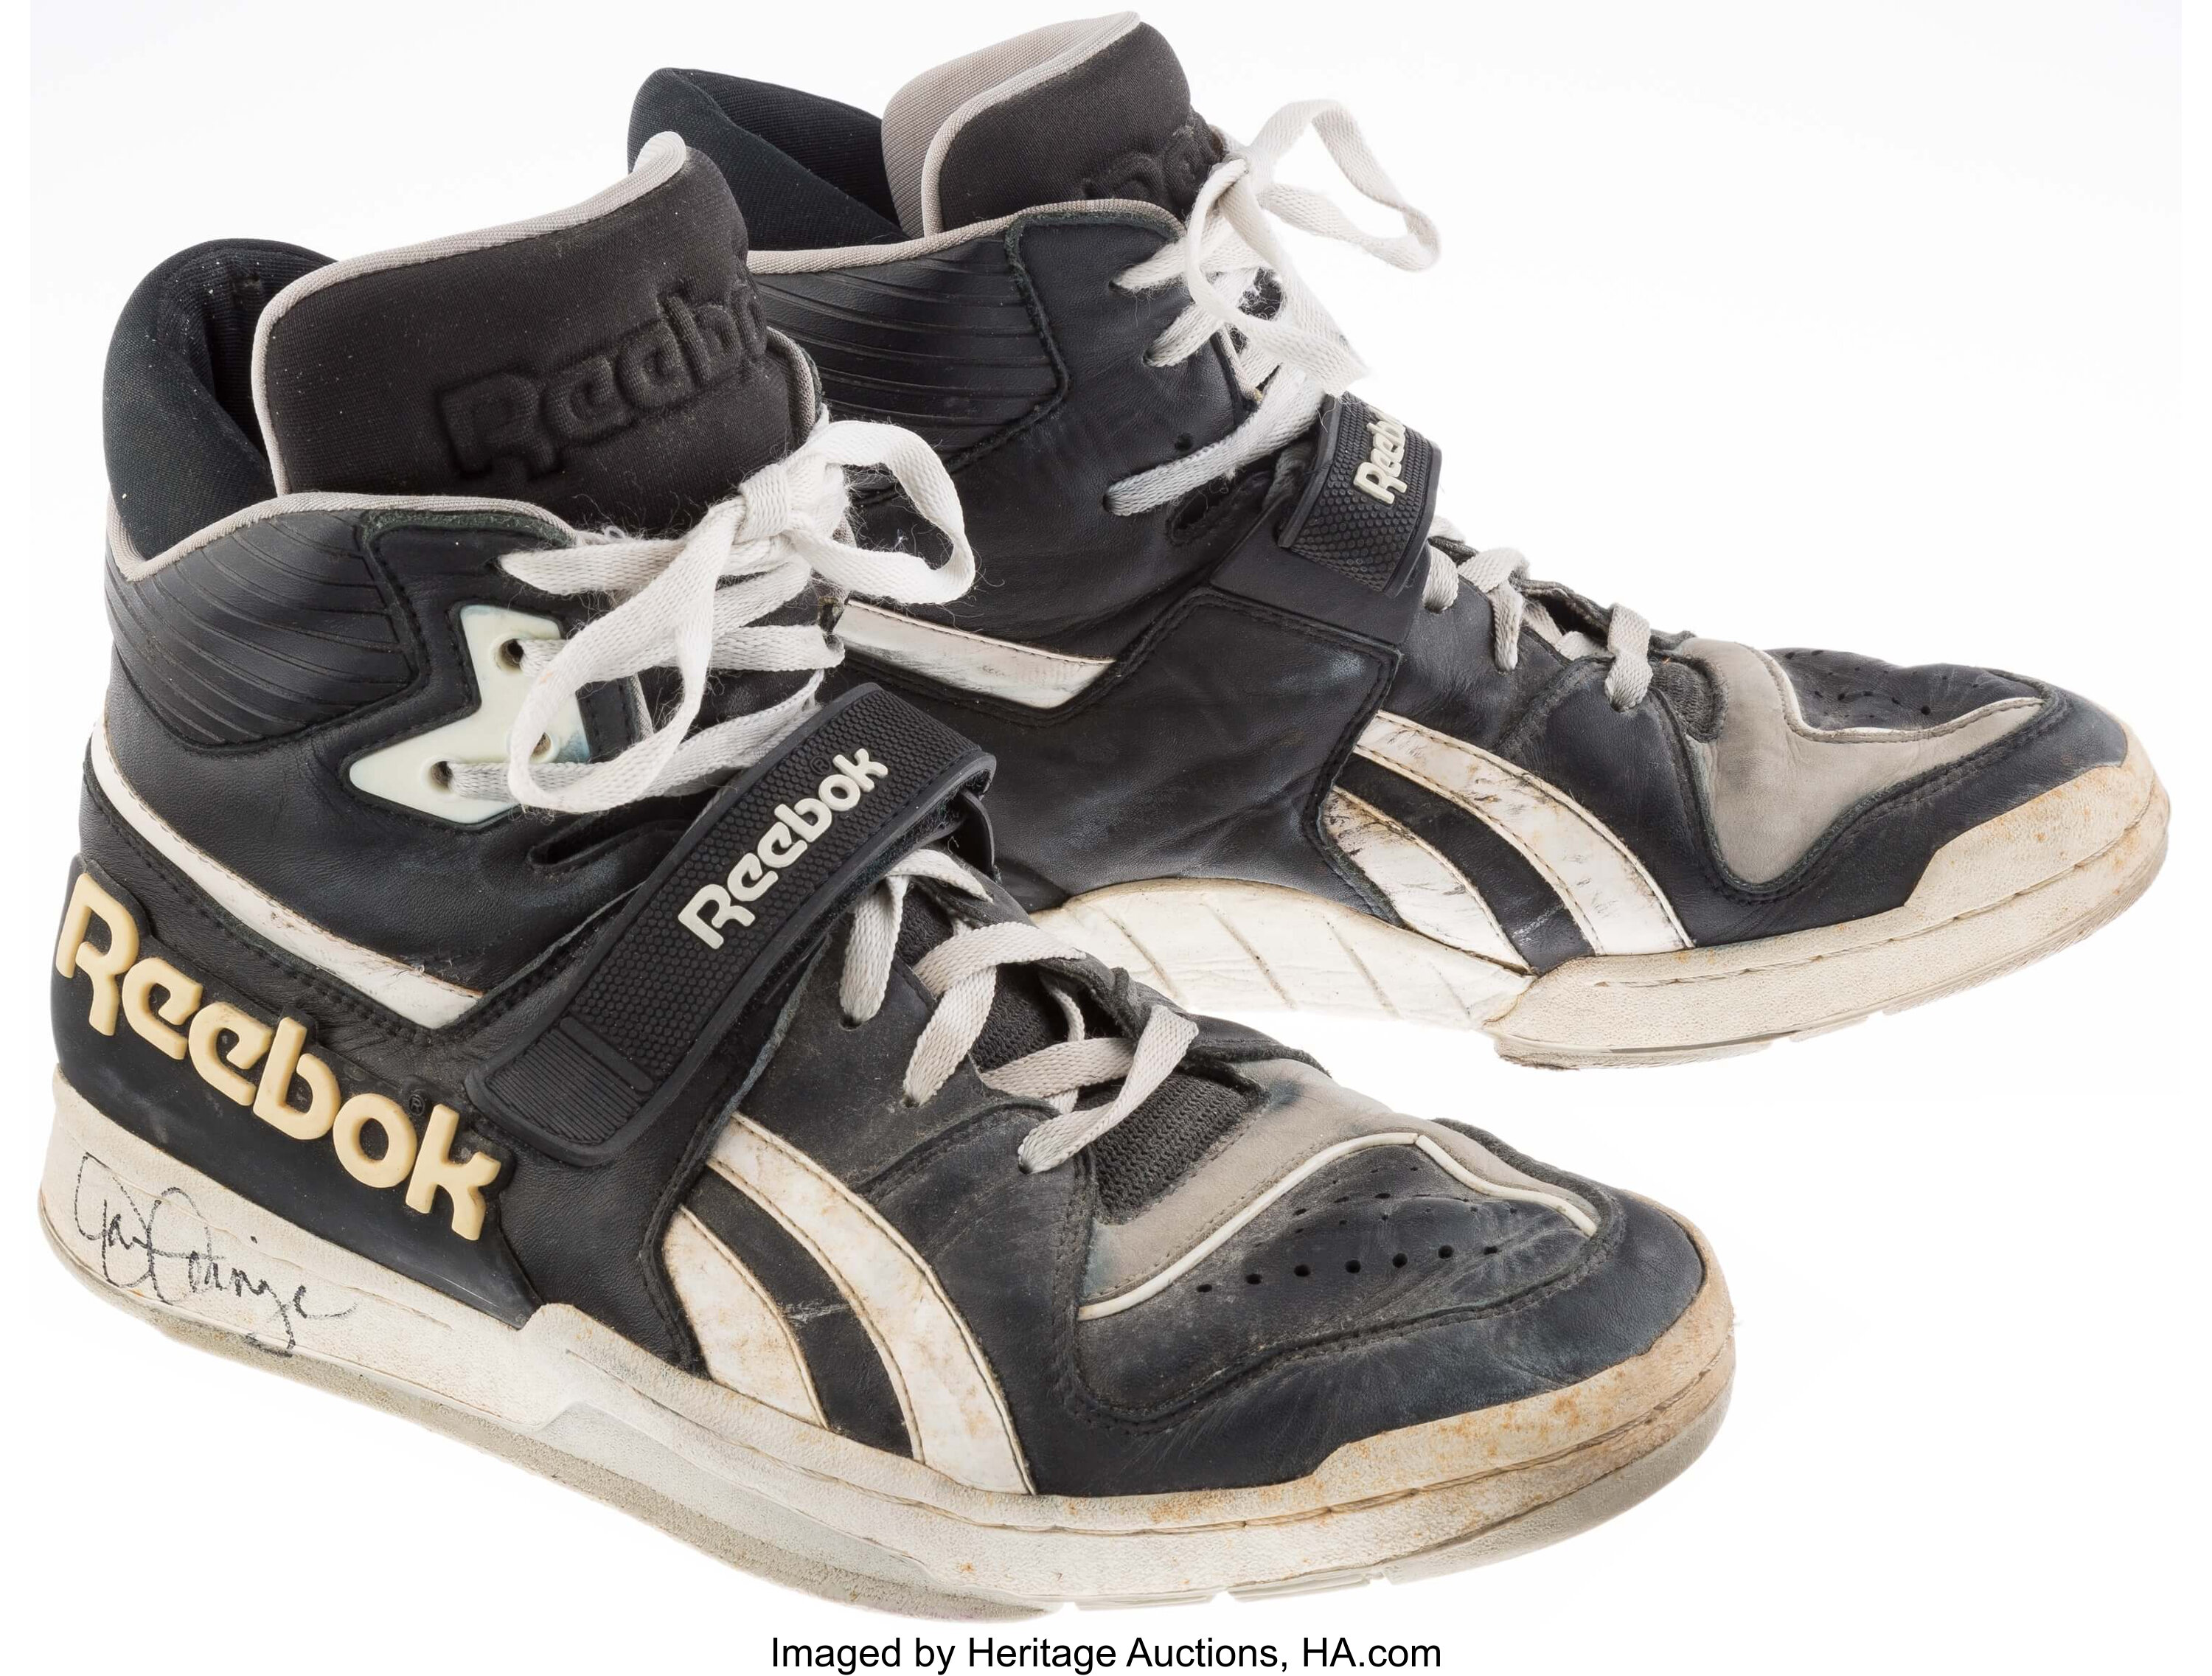 What Model Are Danny Ainge's Reebok Celtics Shoes?